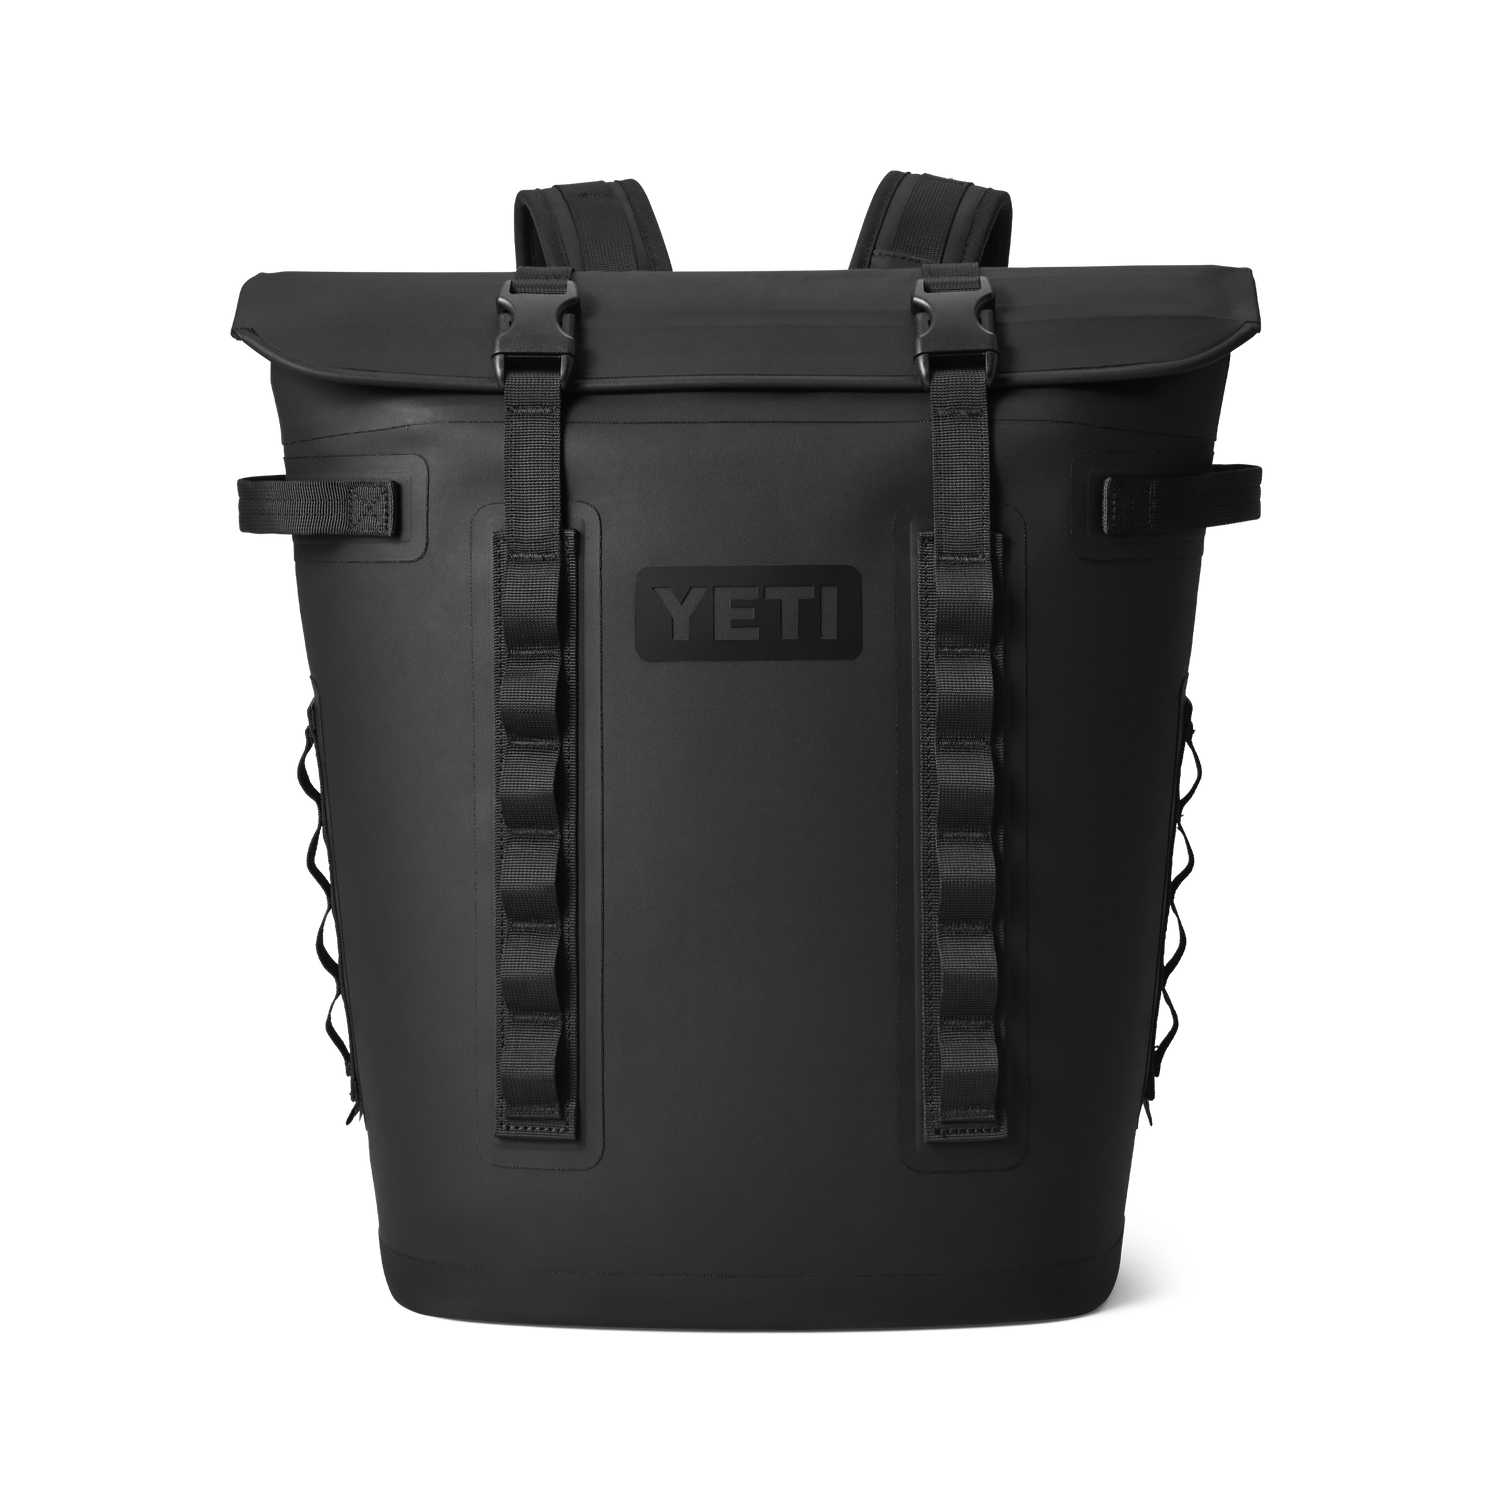 Yeti Soft Coolers Clearance Online - Yeti Deals Australia